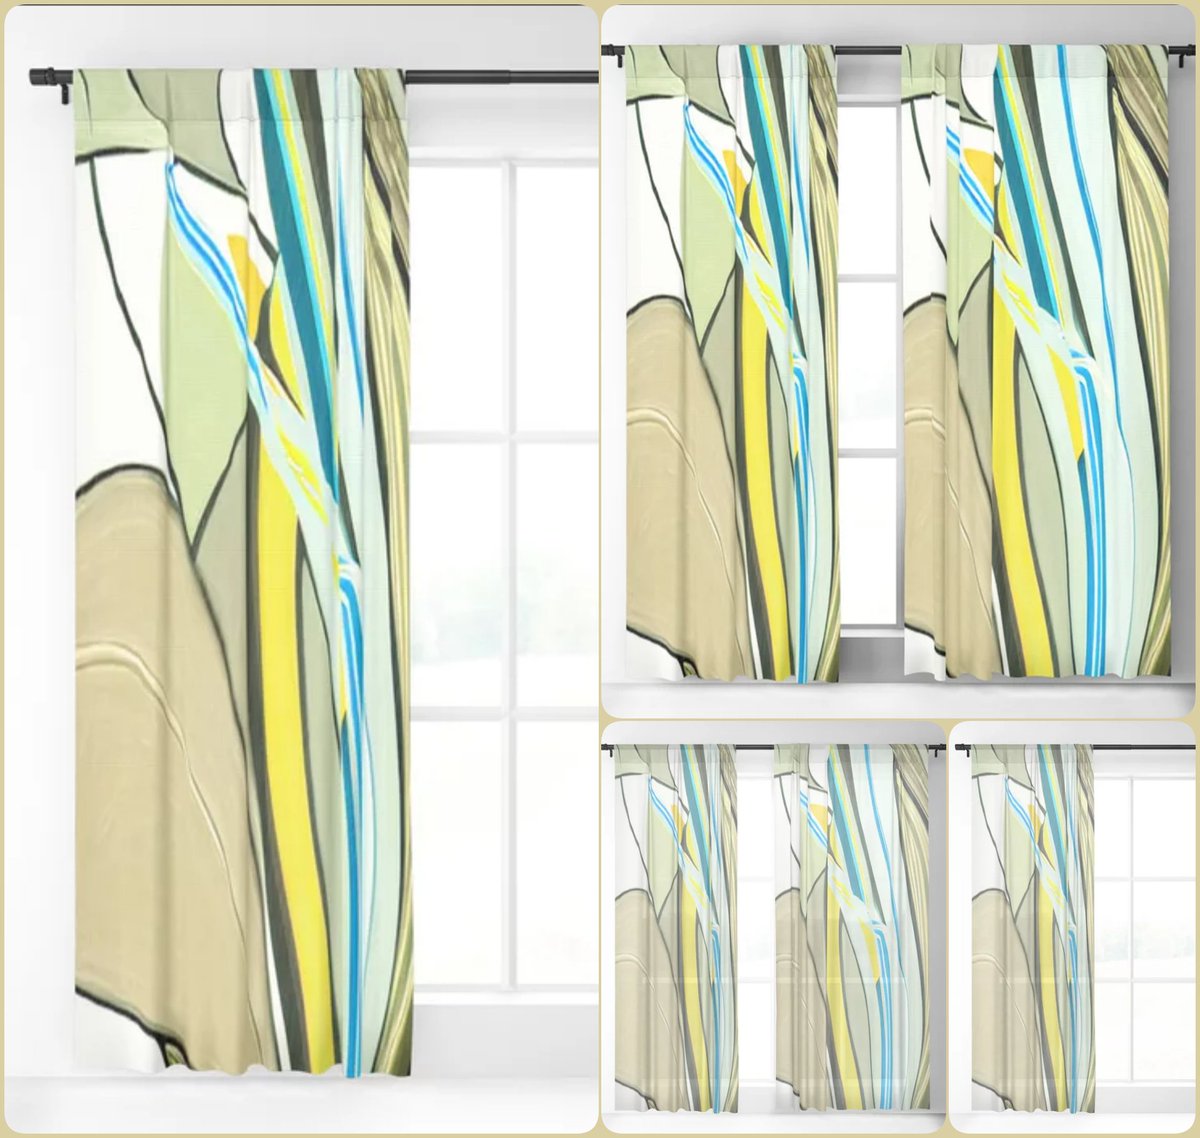 Ice Wanderers Blackout & Sheer Curtain~by Art Falaxy~
~Exquisite Decor~
#artfalaxy #art #curtains #drapes #homedecor #society6 #Society6max #swirls #accents #sheercurtains #windowtreatments #blackoutcurtains #floorrugs

society6.com/product/ice-wa…